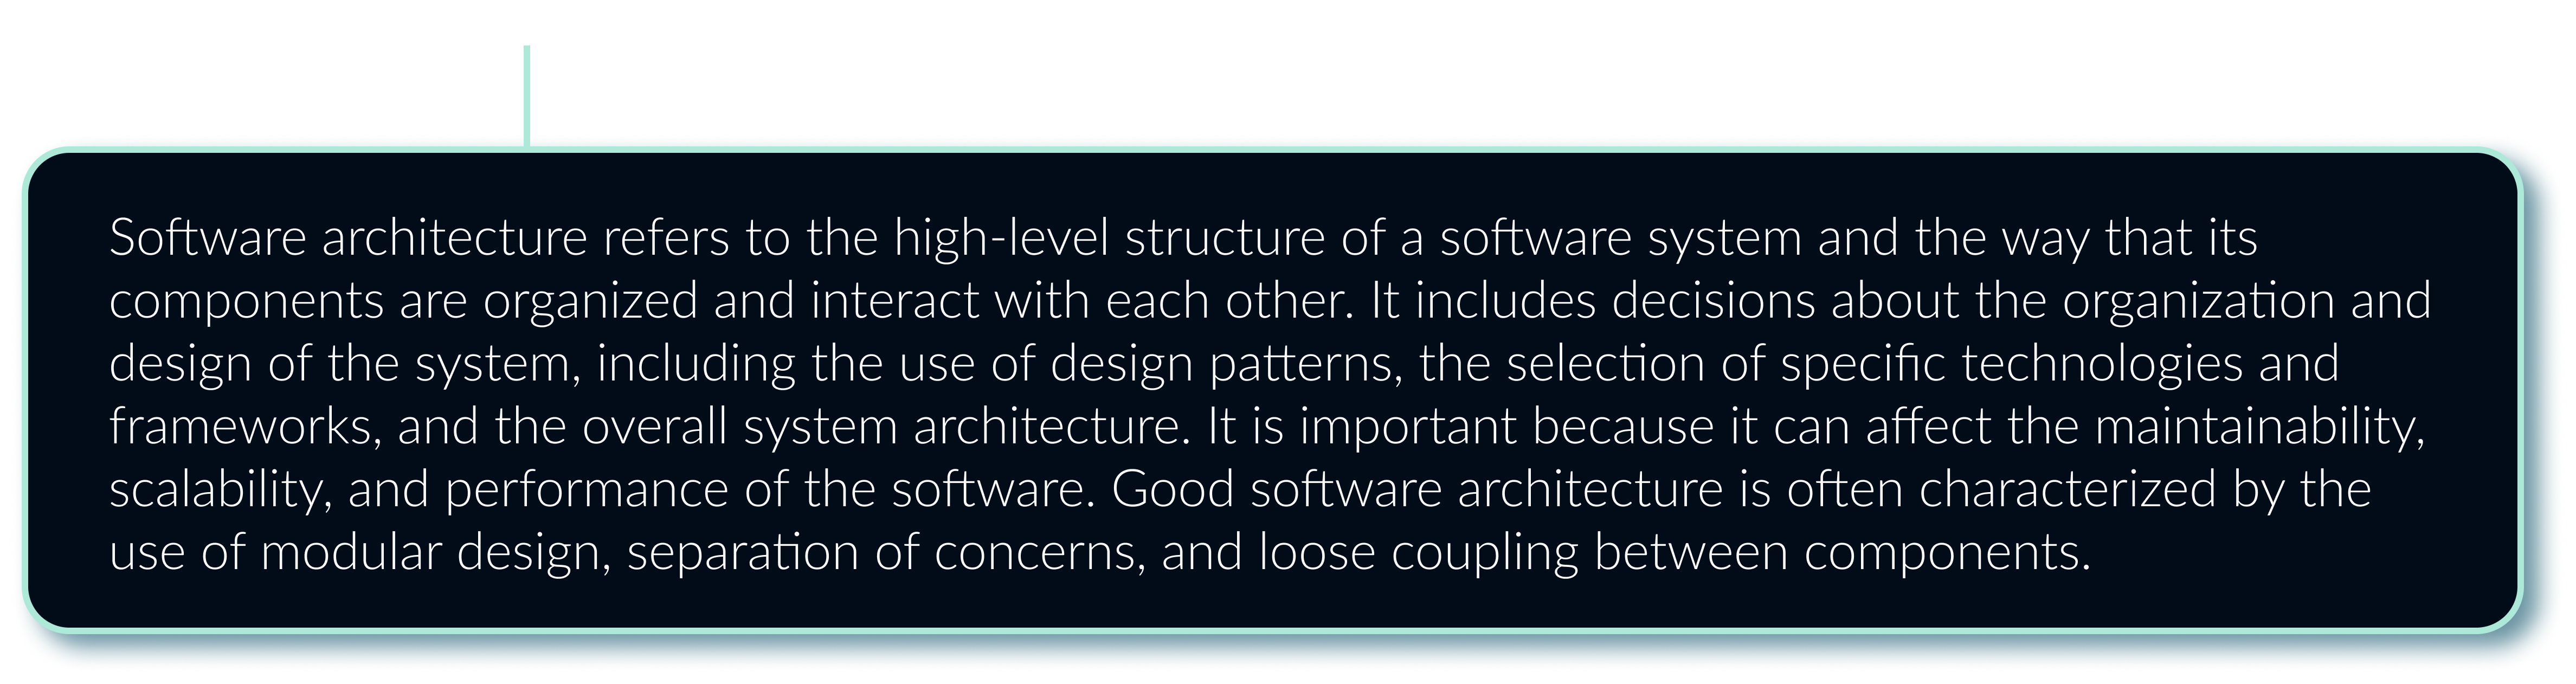 software-architecture-information